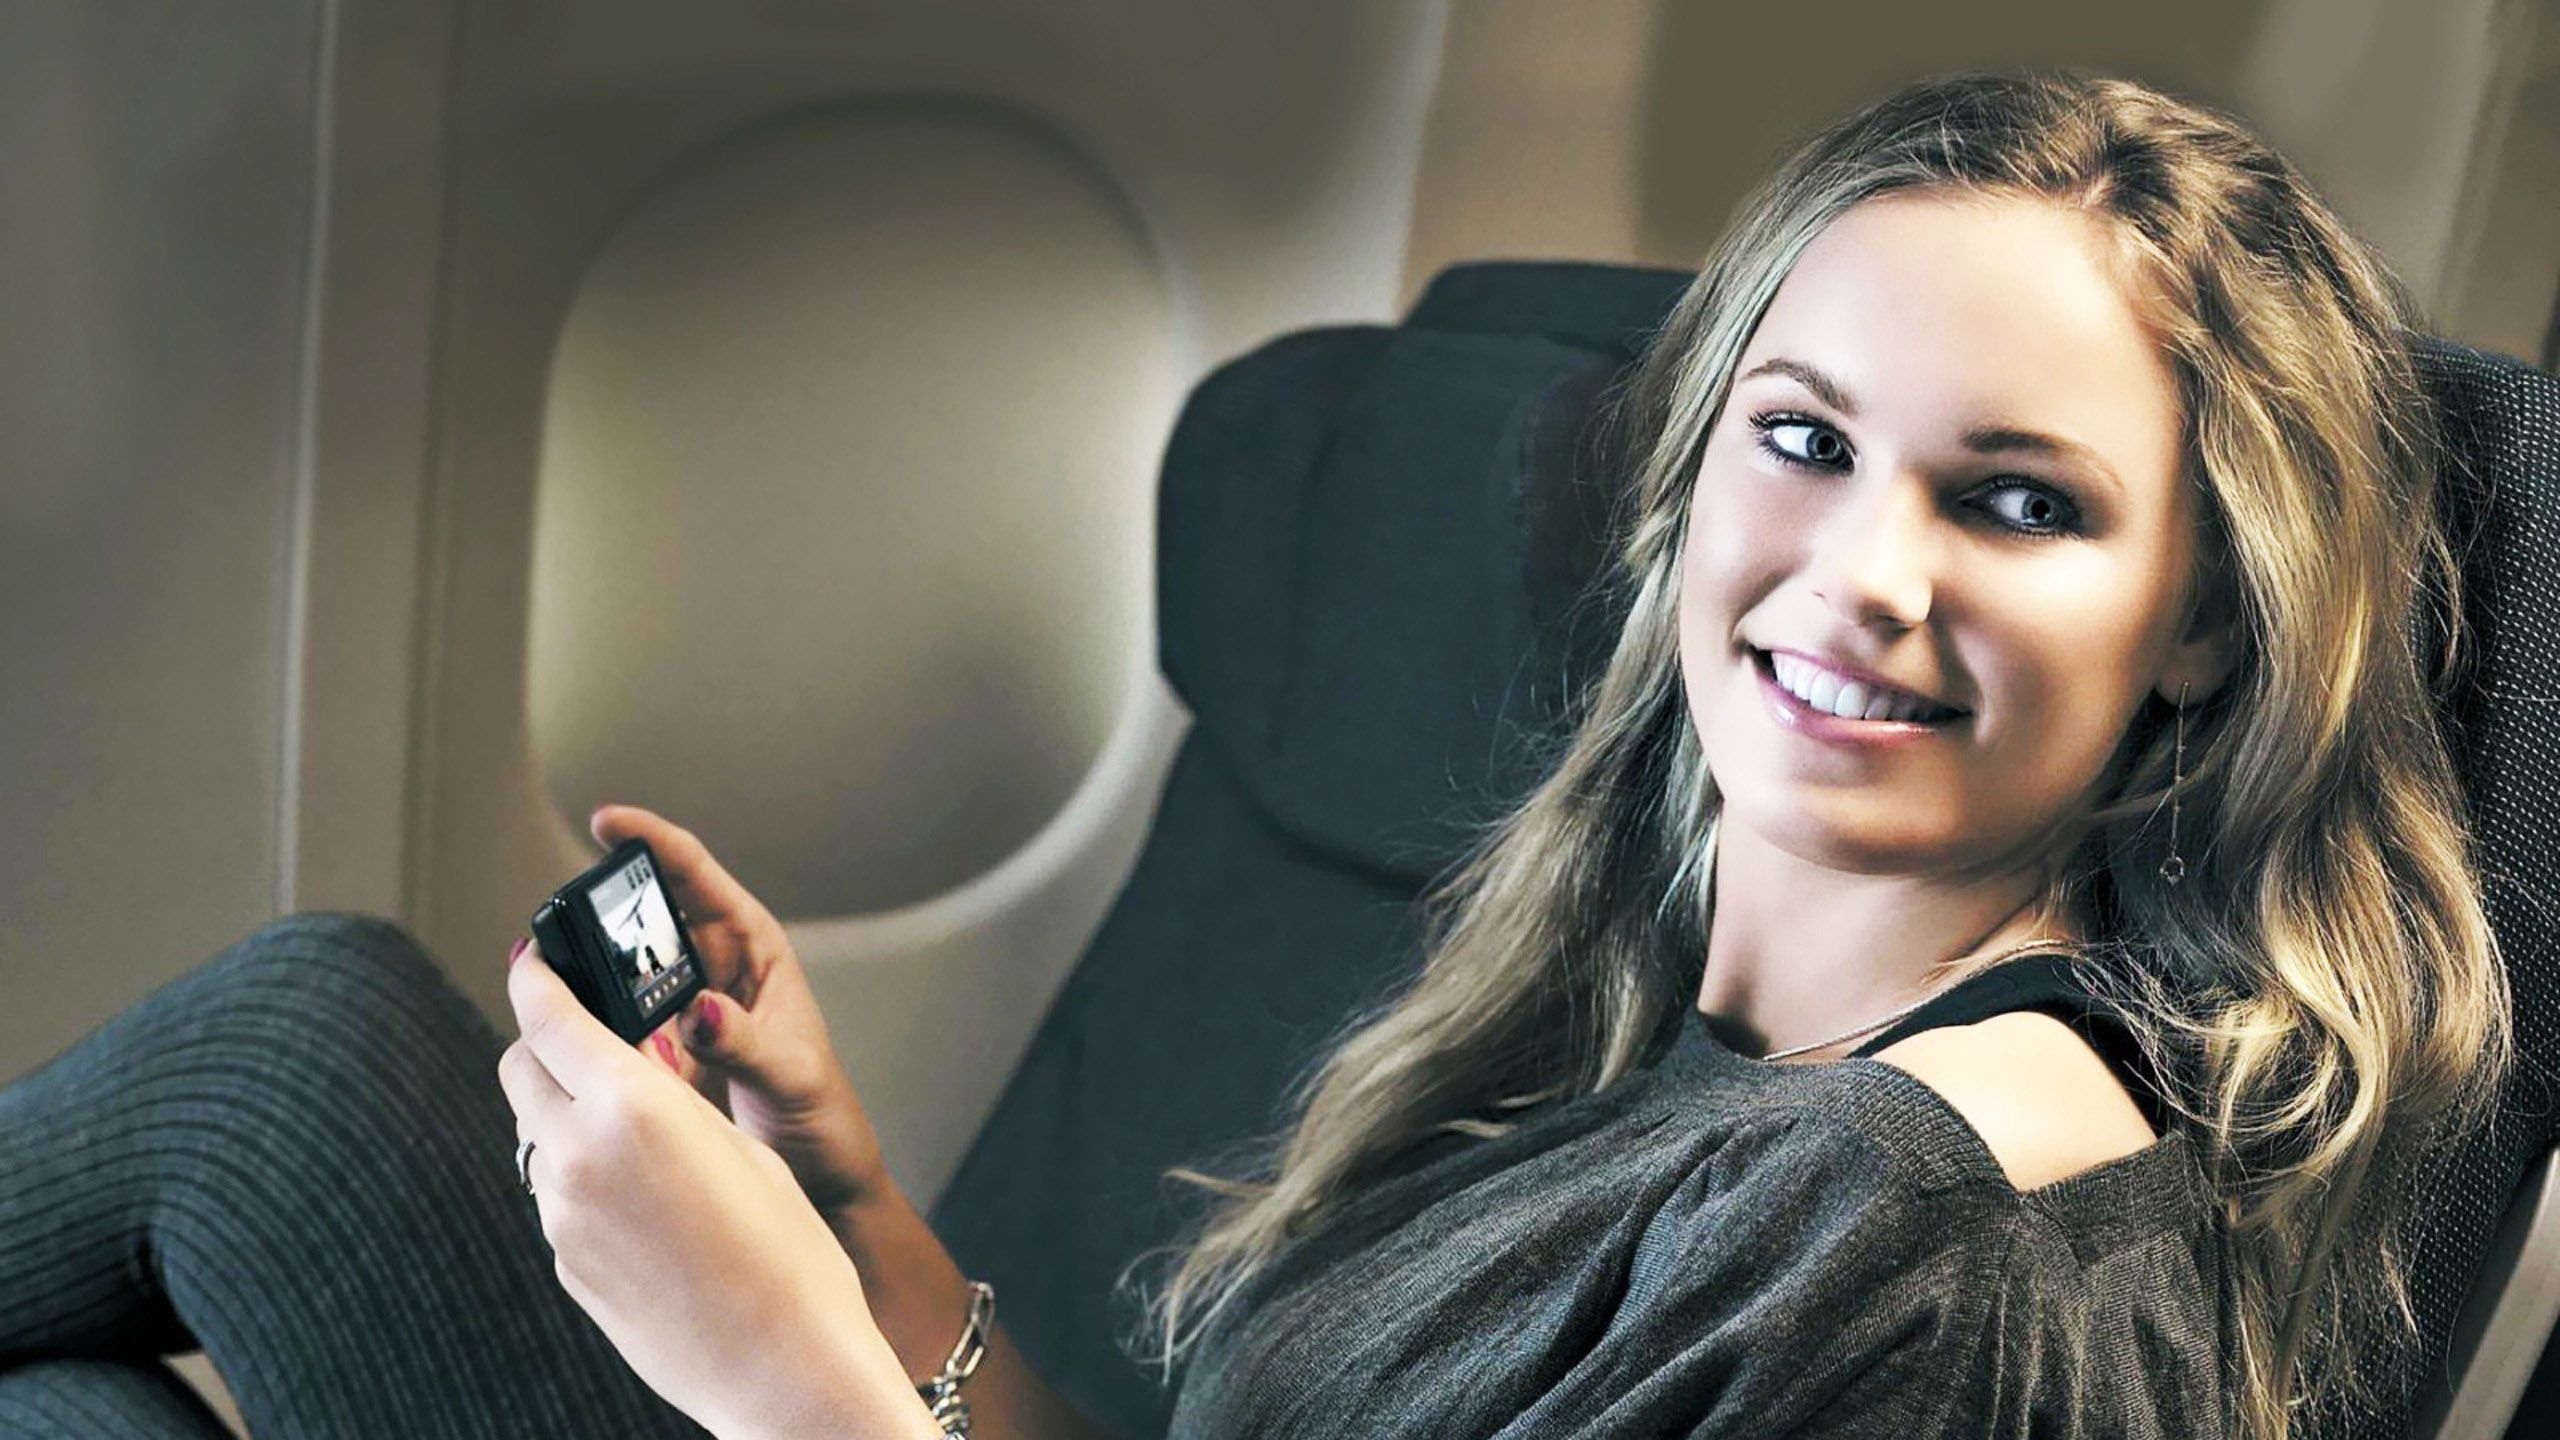 Caroline Wozniacki Airplane for 2560x1440 HDTV resolution